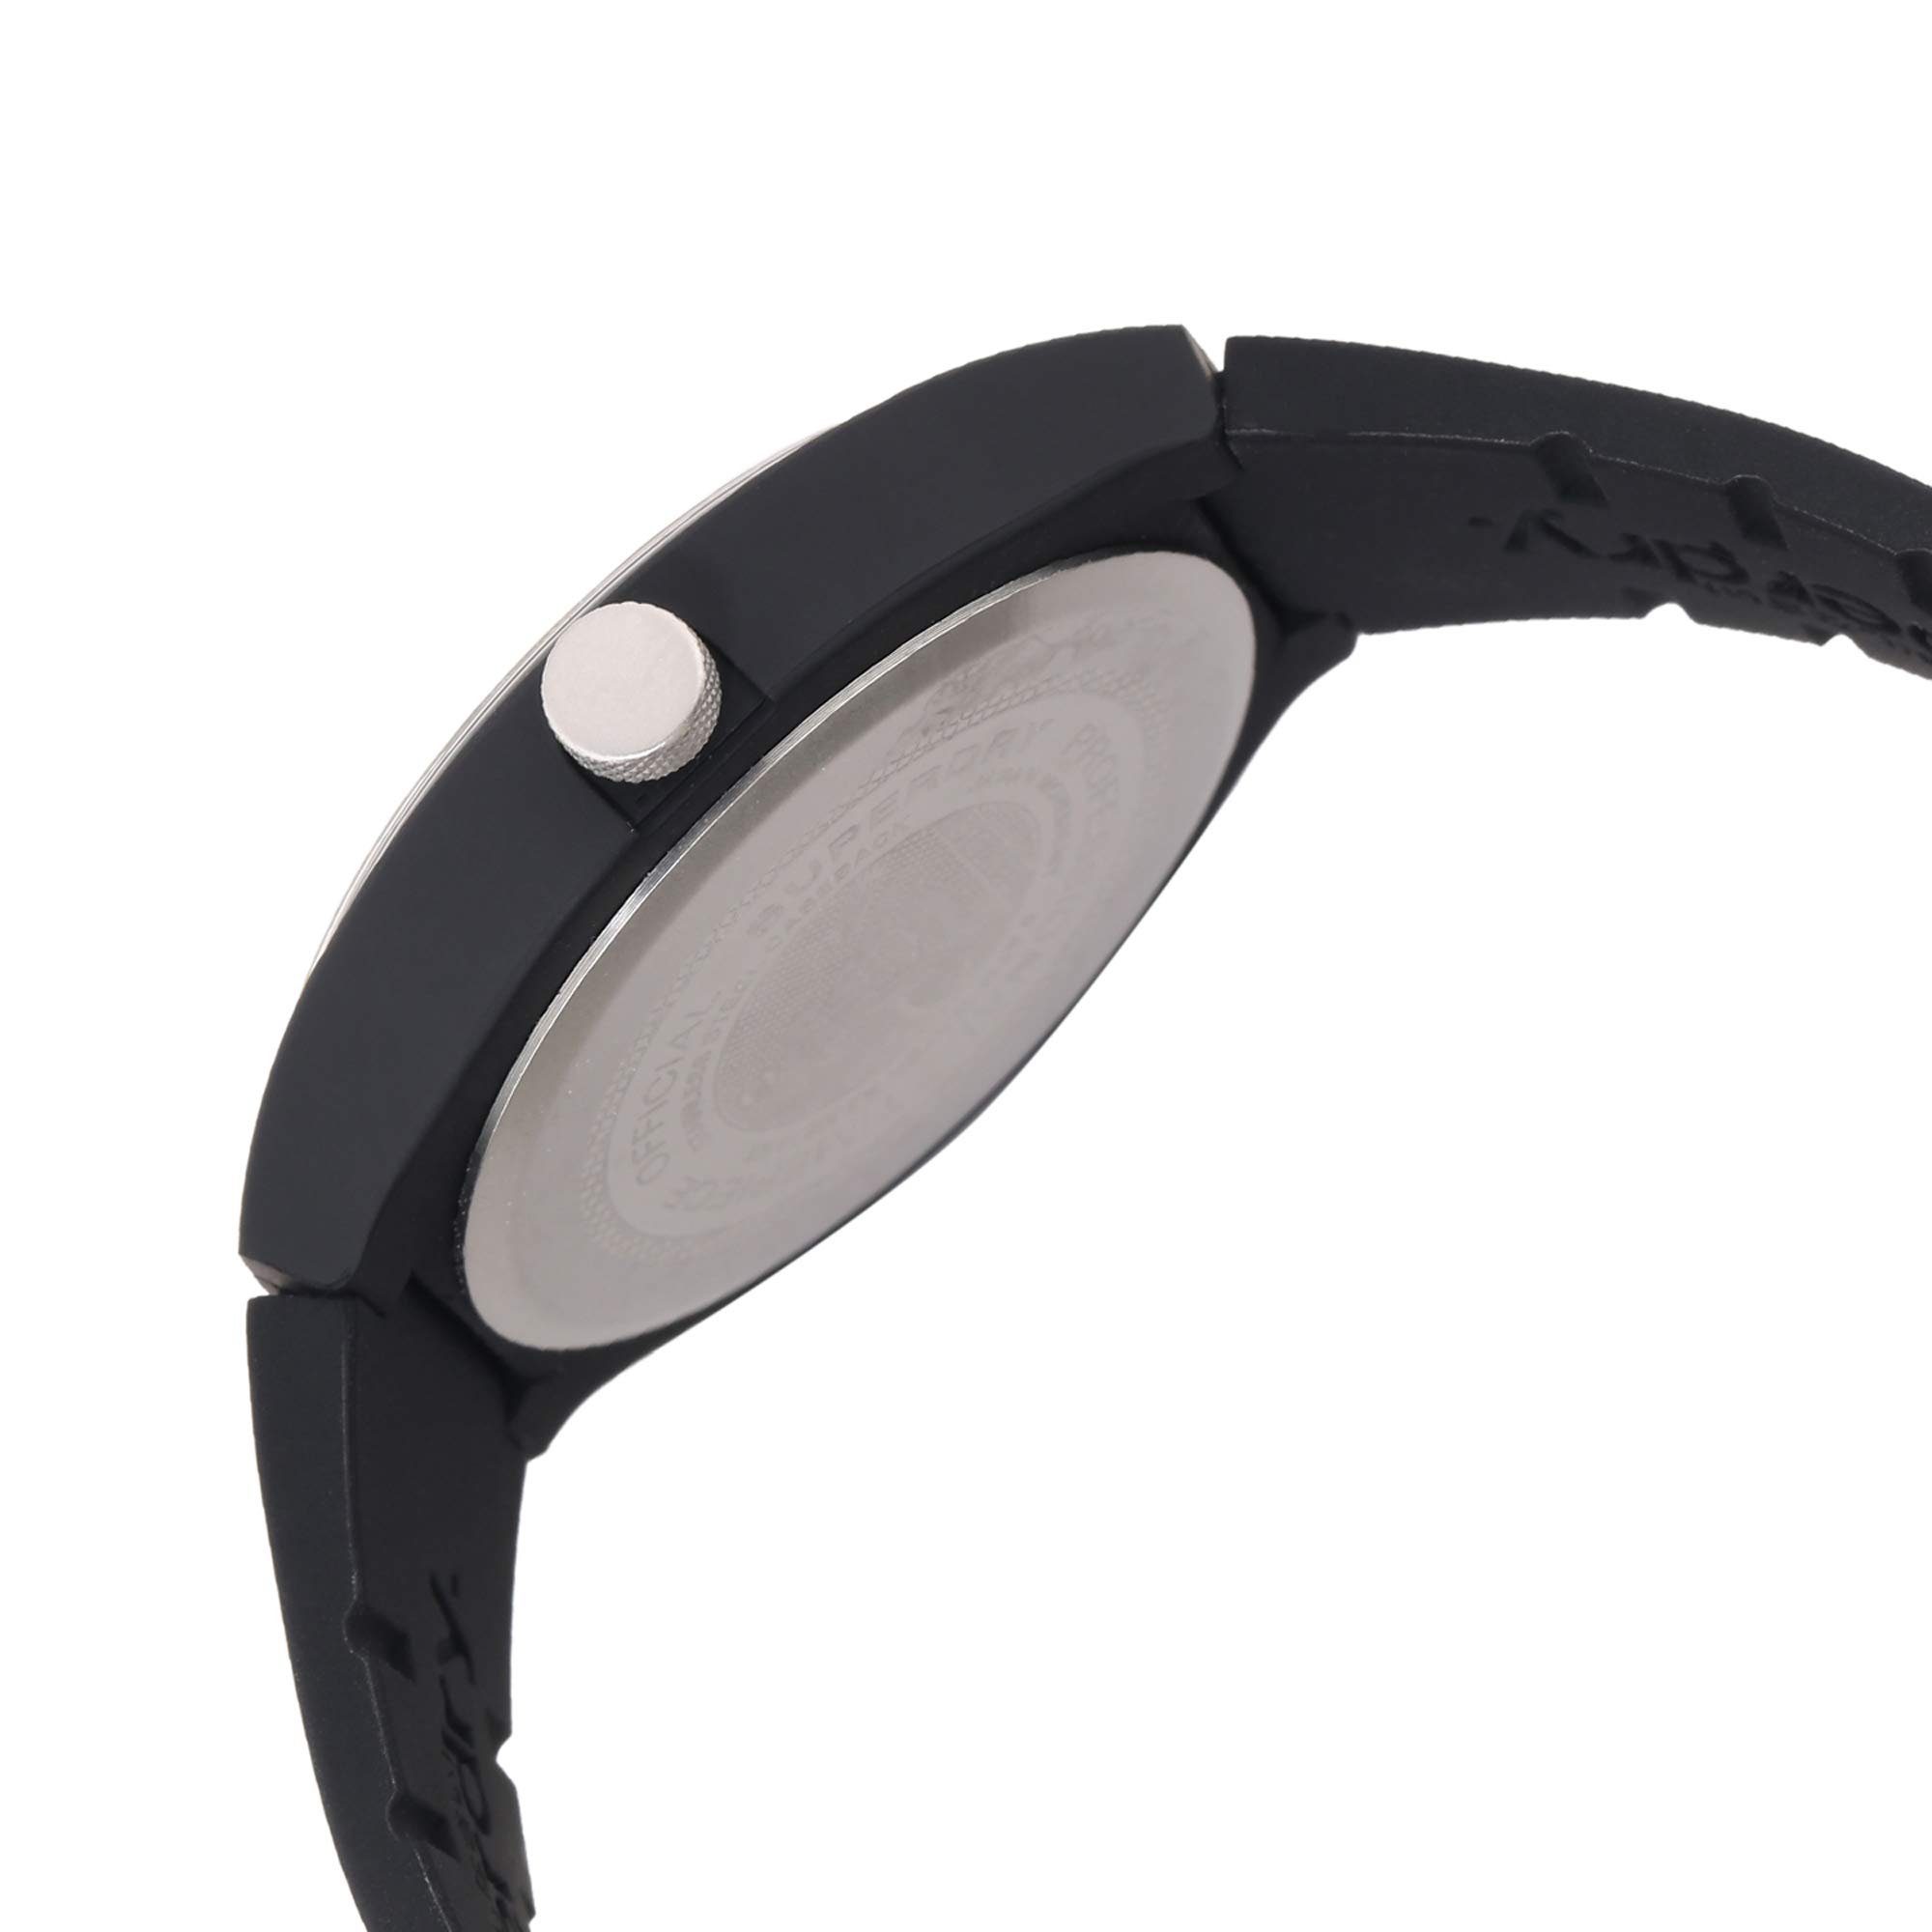 Herren Analog Uhr Armband mit Superdry SYG280BO Silicone Quarzuhr, Superdry Quarz